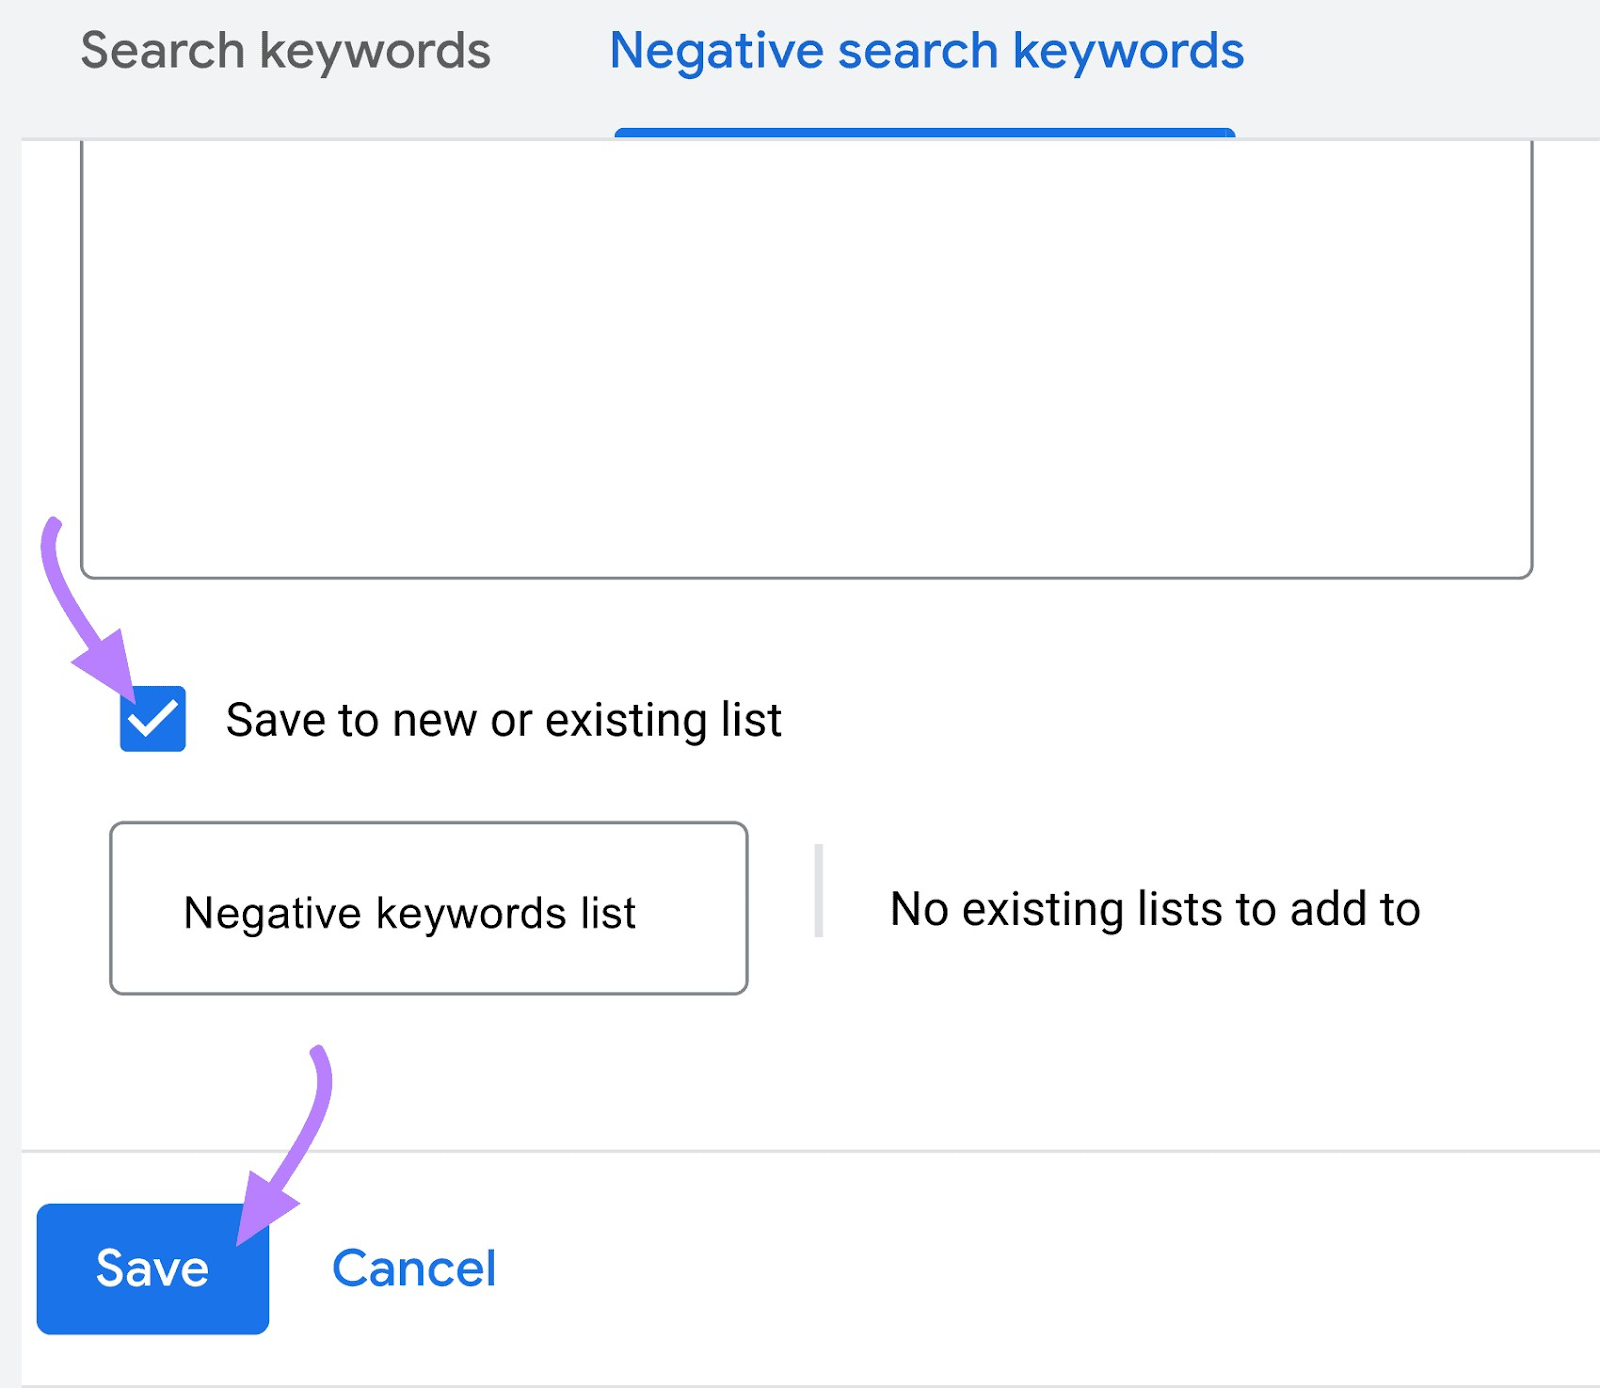 Save your negative keywords